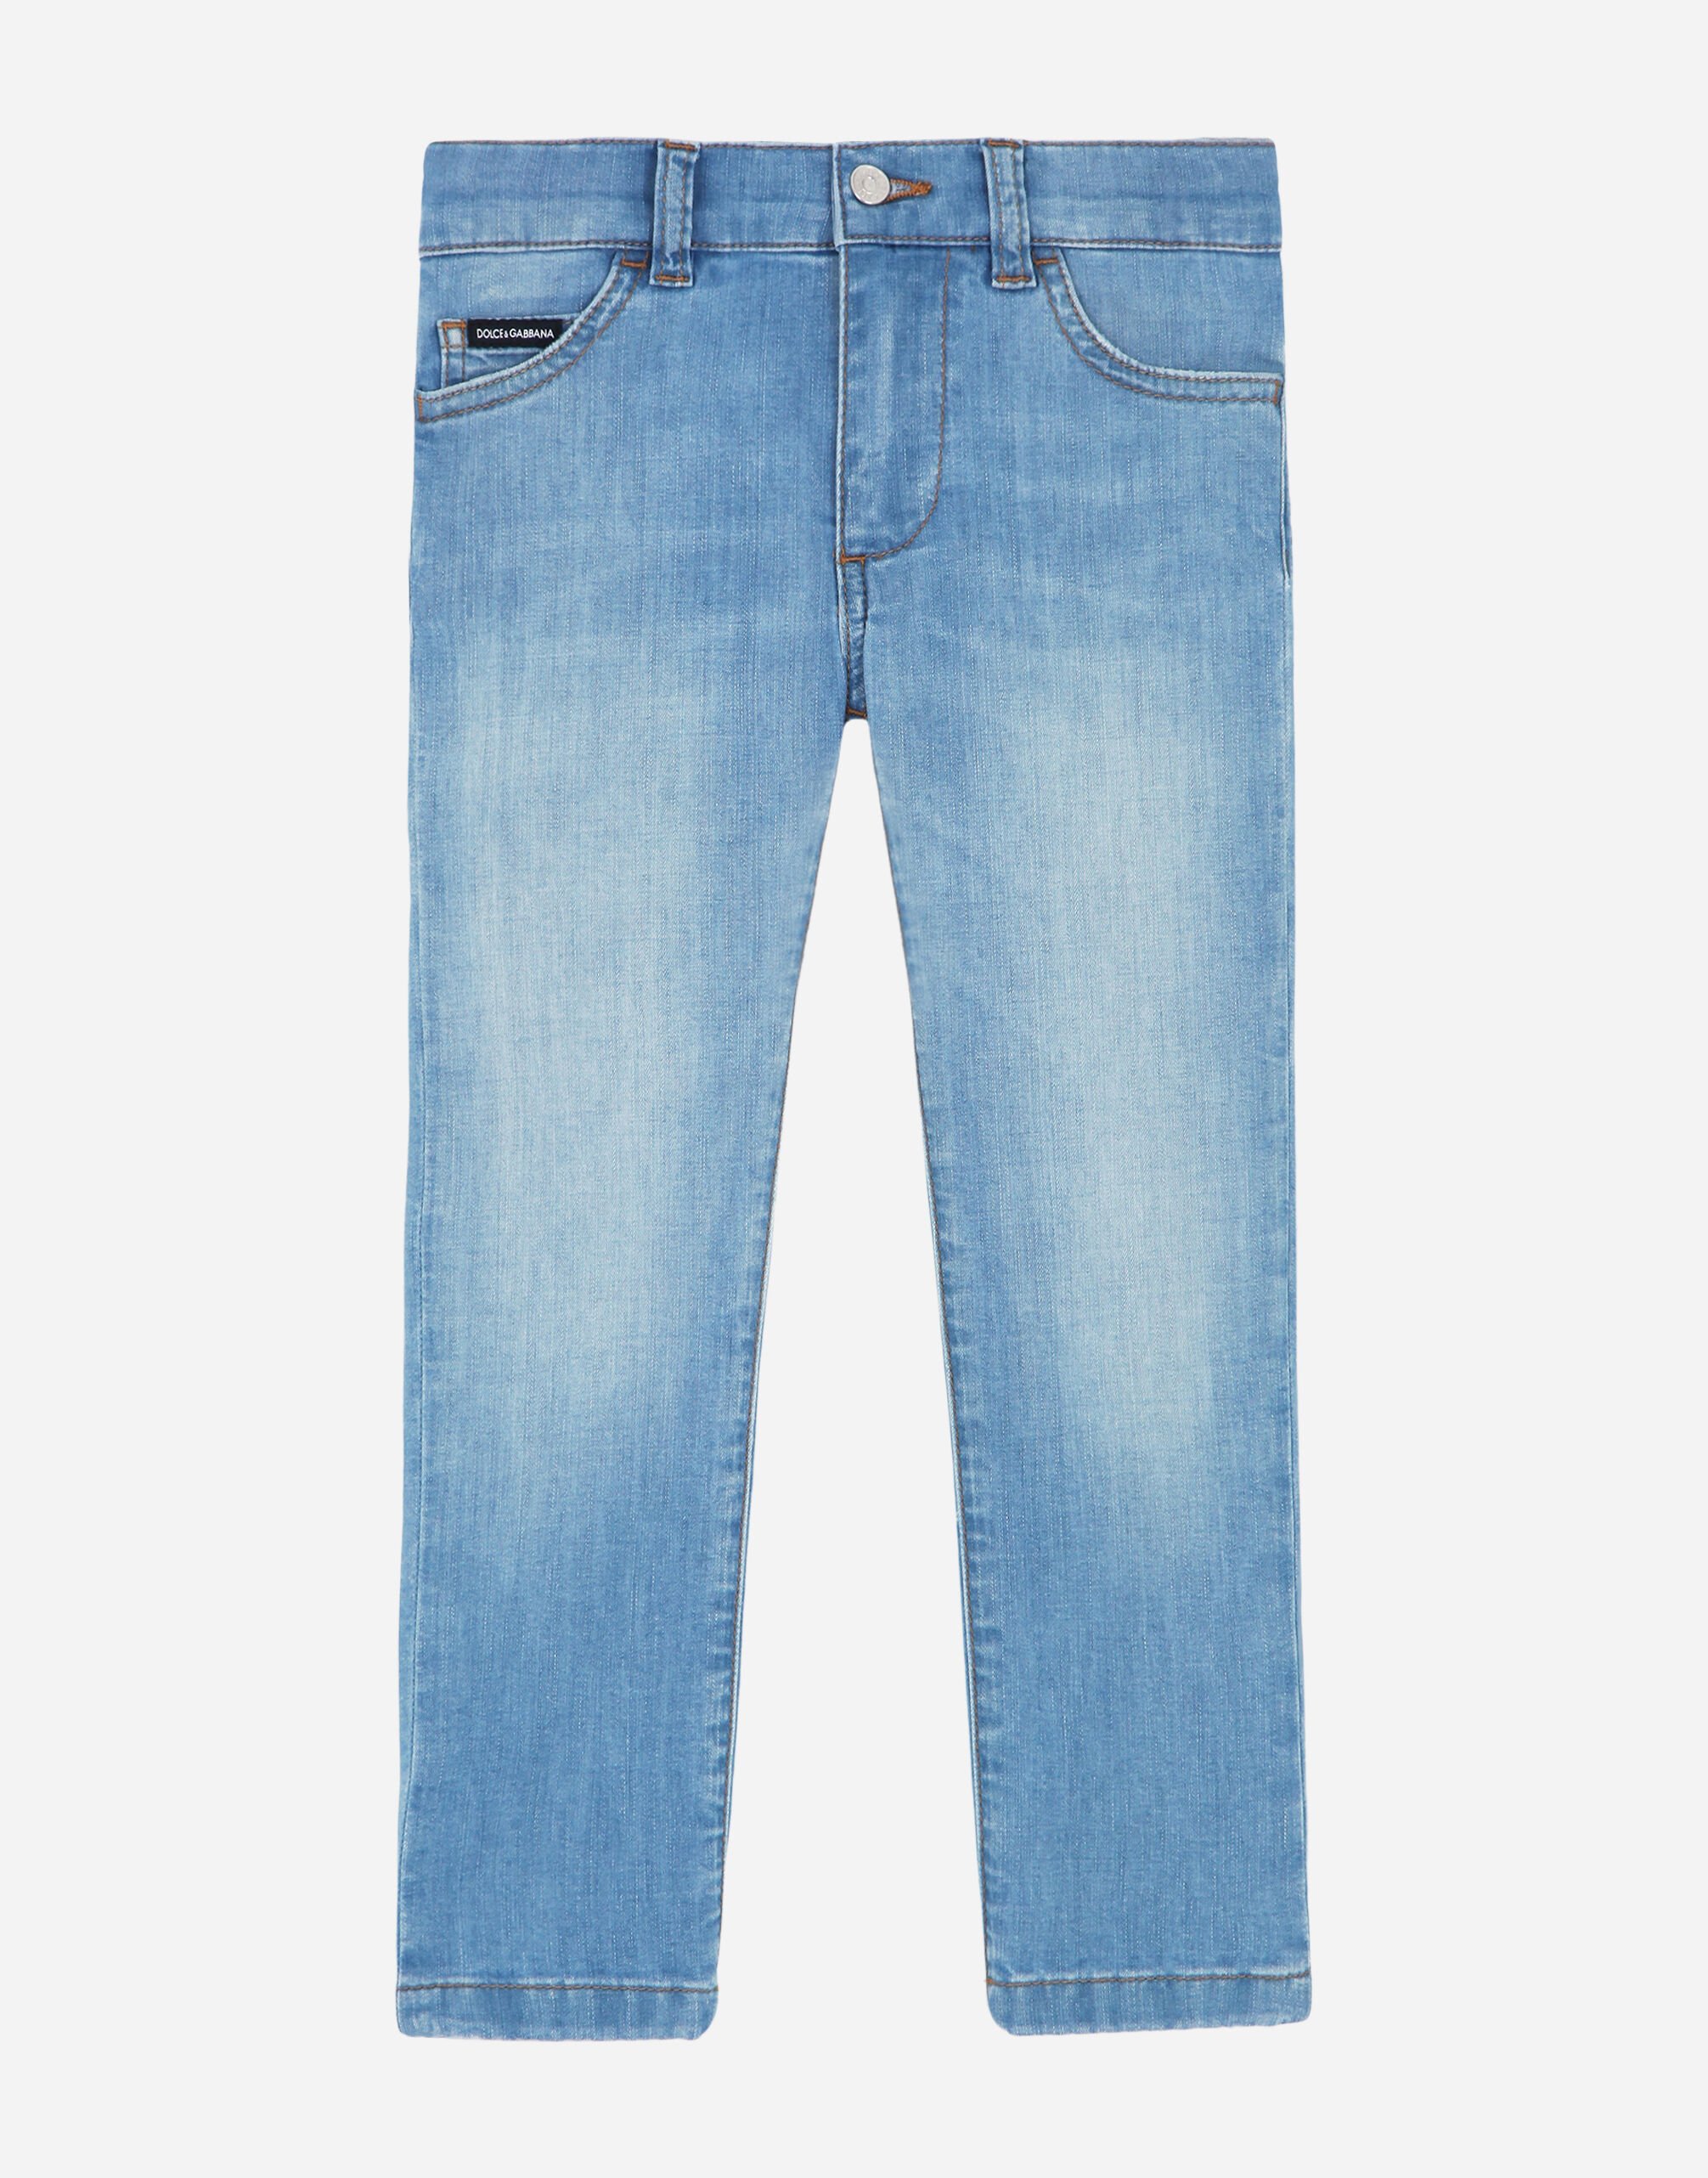 Dolce & Gabbana Stretch slim fit baby blue jeans Multicolor L4J840G7H2U